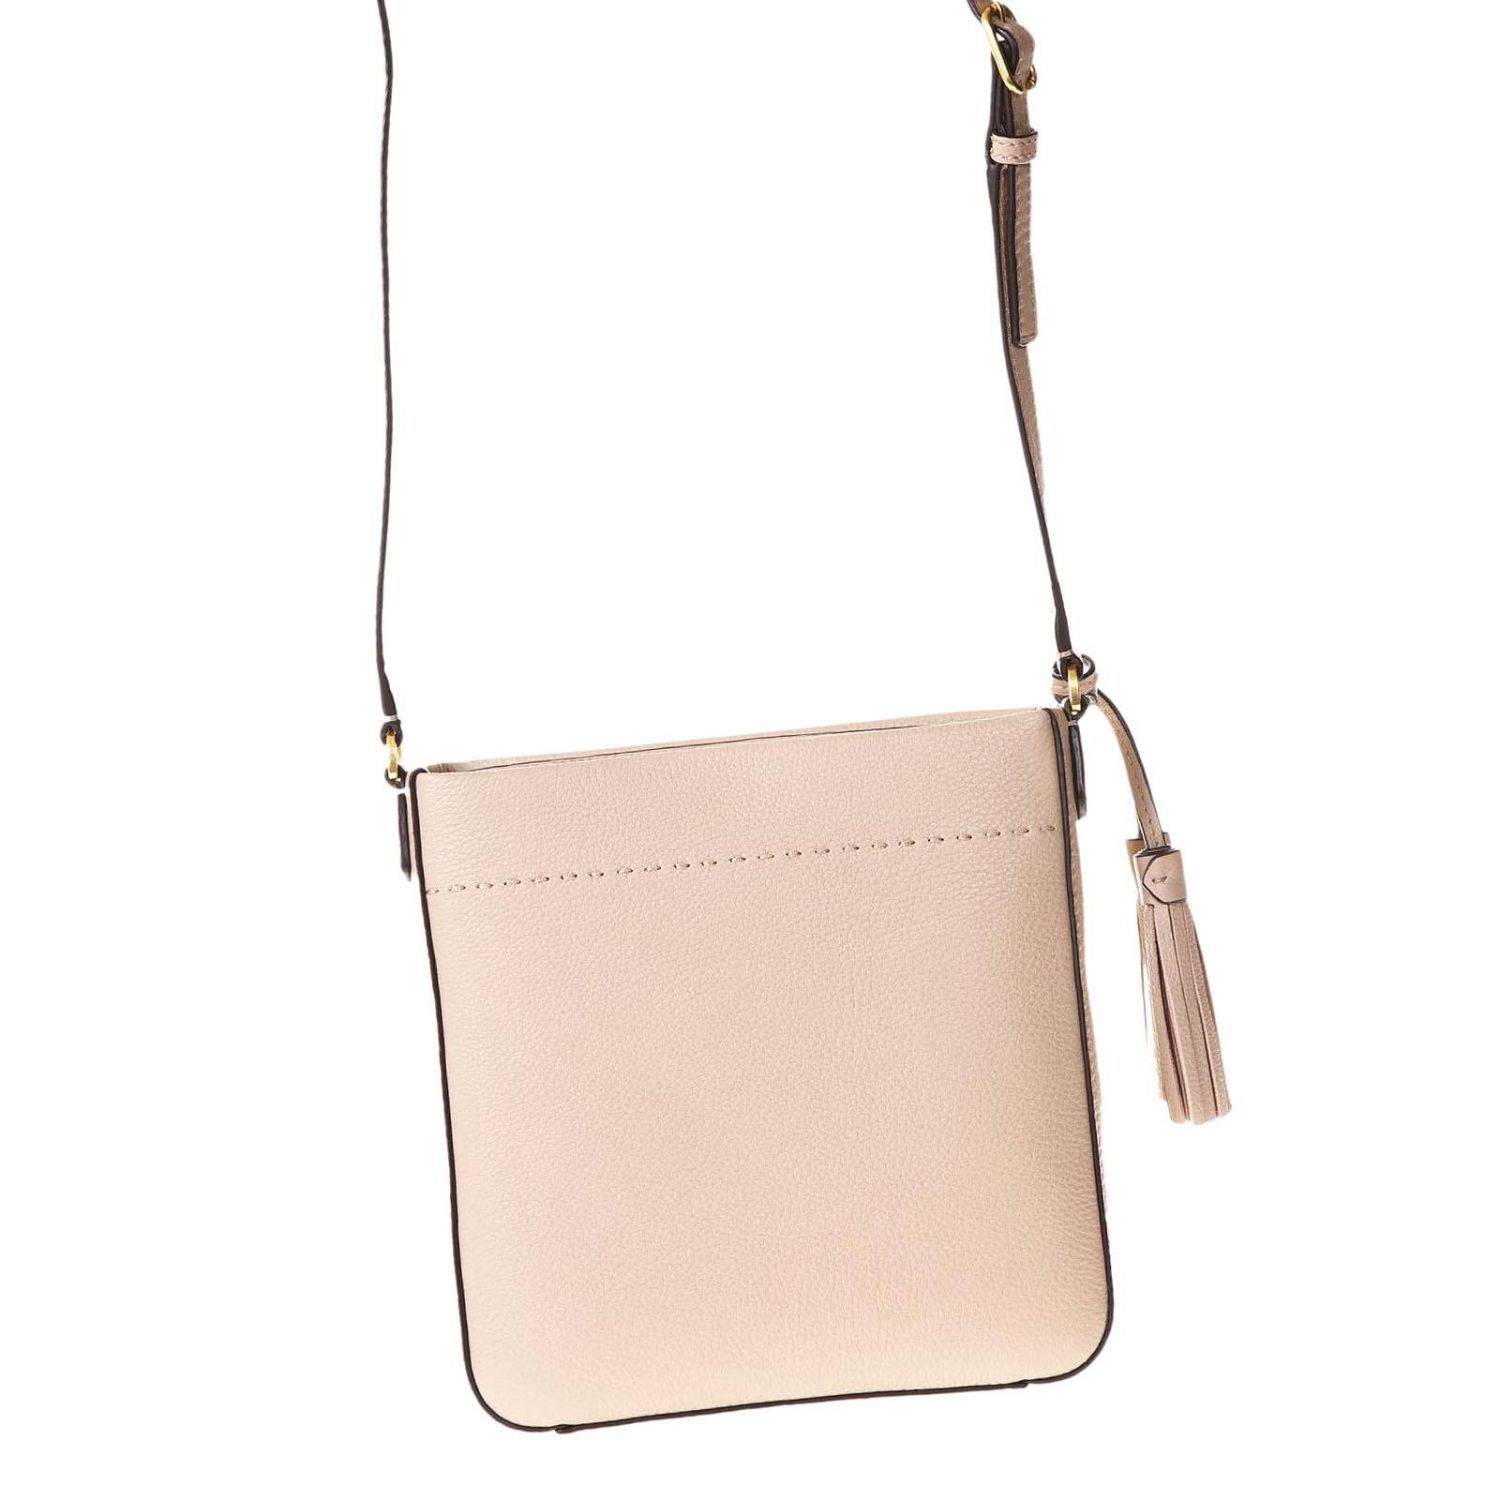 TORY BURCH: Handbag women - Blush Pink | Handbag Tory Burch 46423 ...